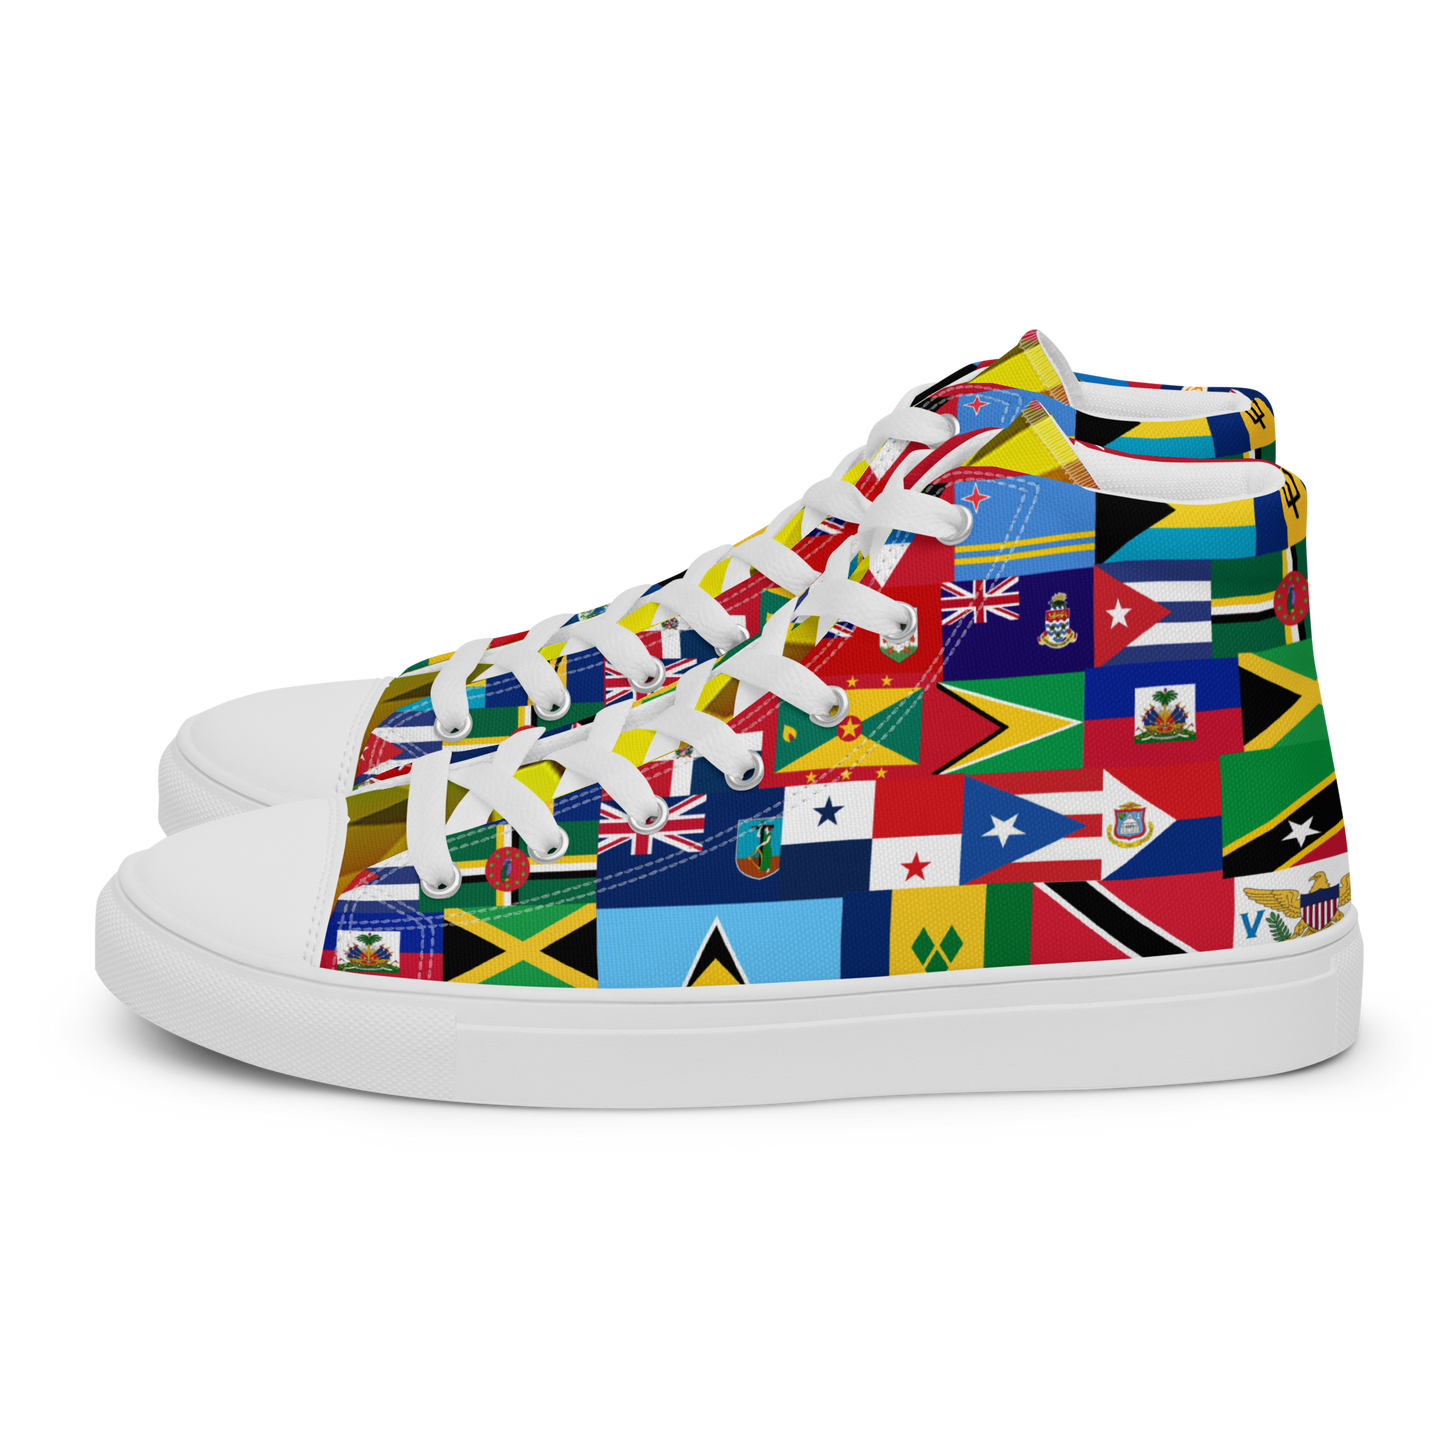 West Indian Flag Men’s high top canvas shoes